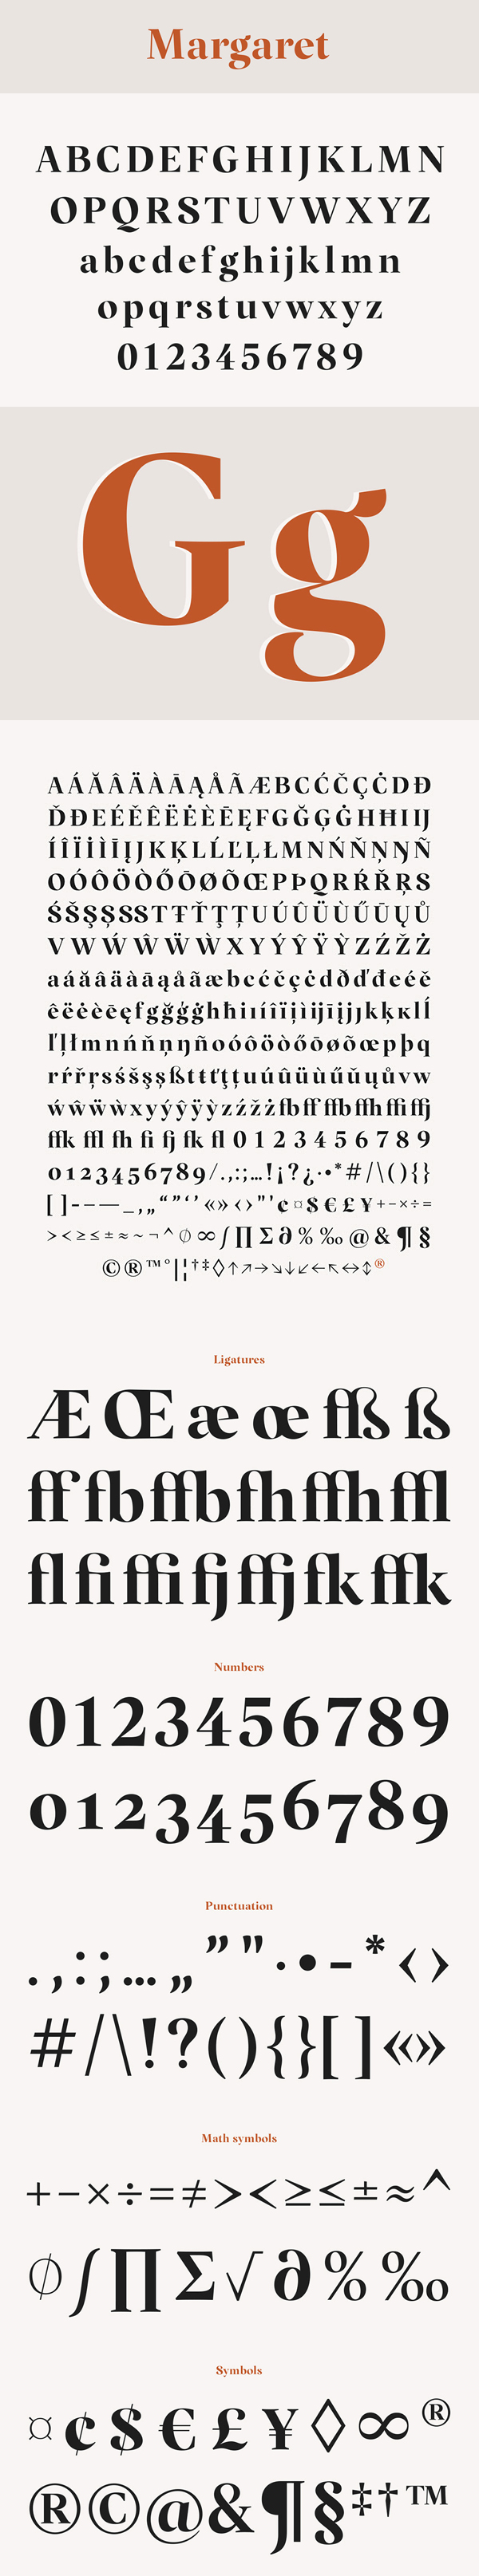 Margaret Serif Font Letters